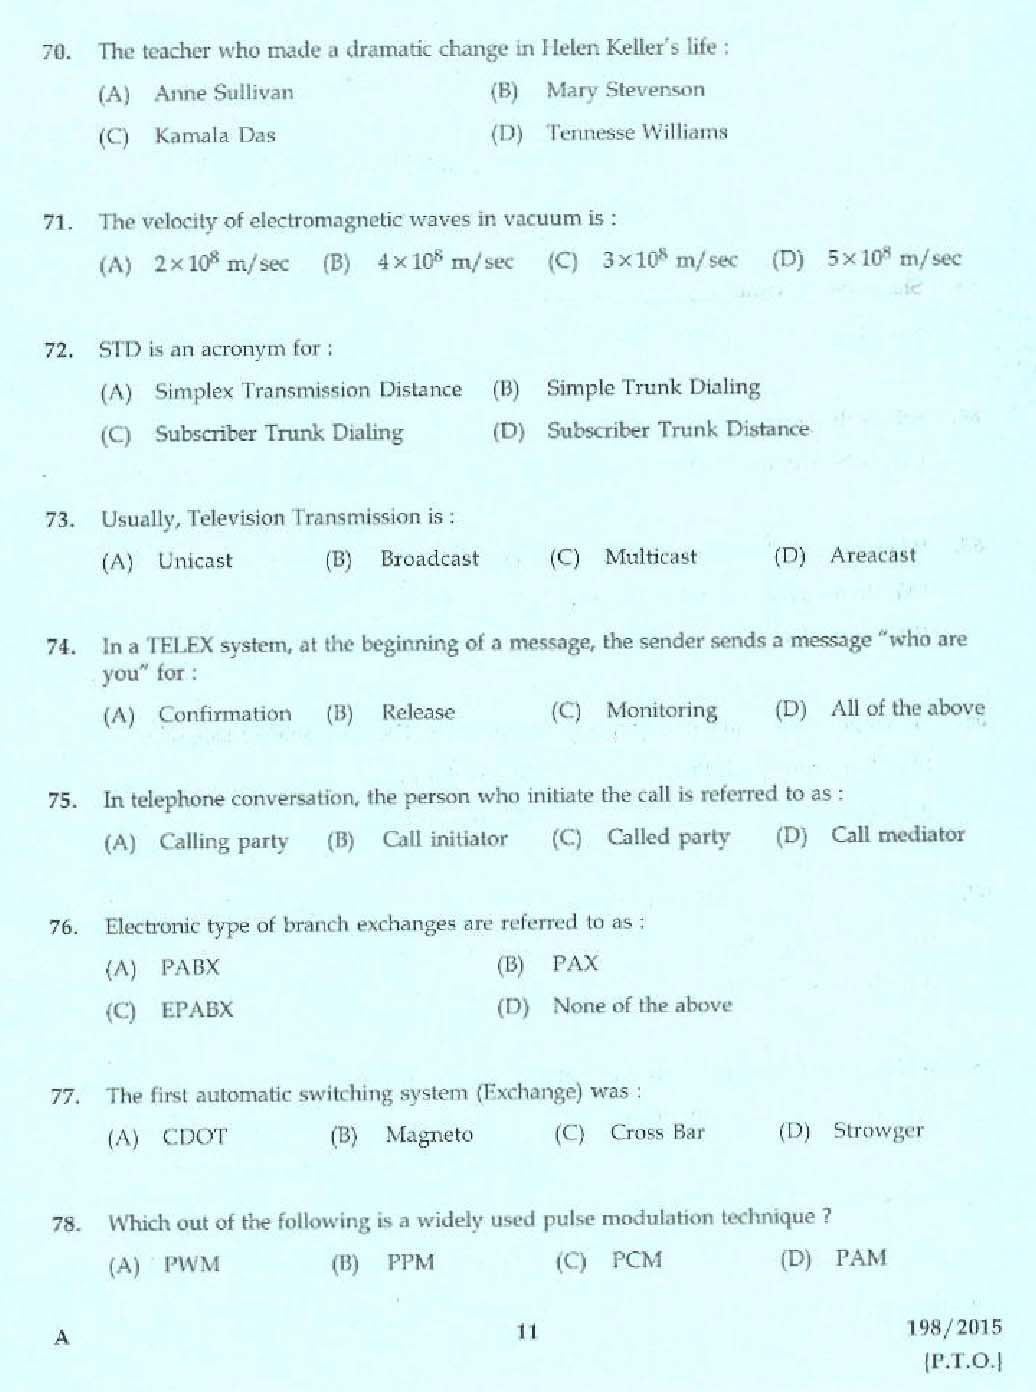 Kerala PSC Telephone Operator Exam Question Code 1982015 9